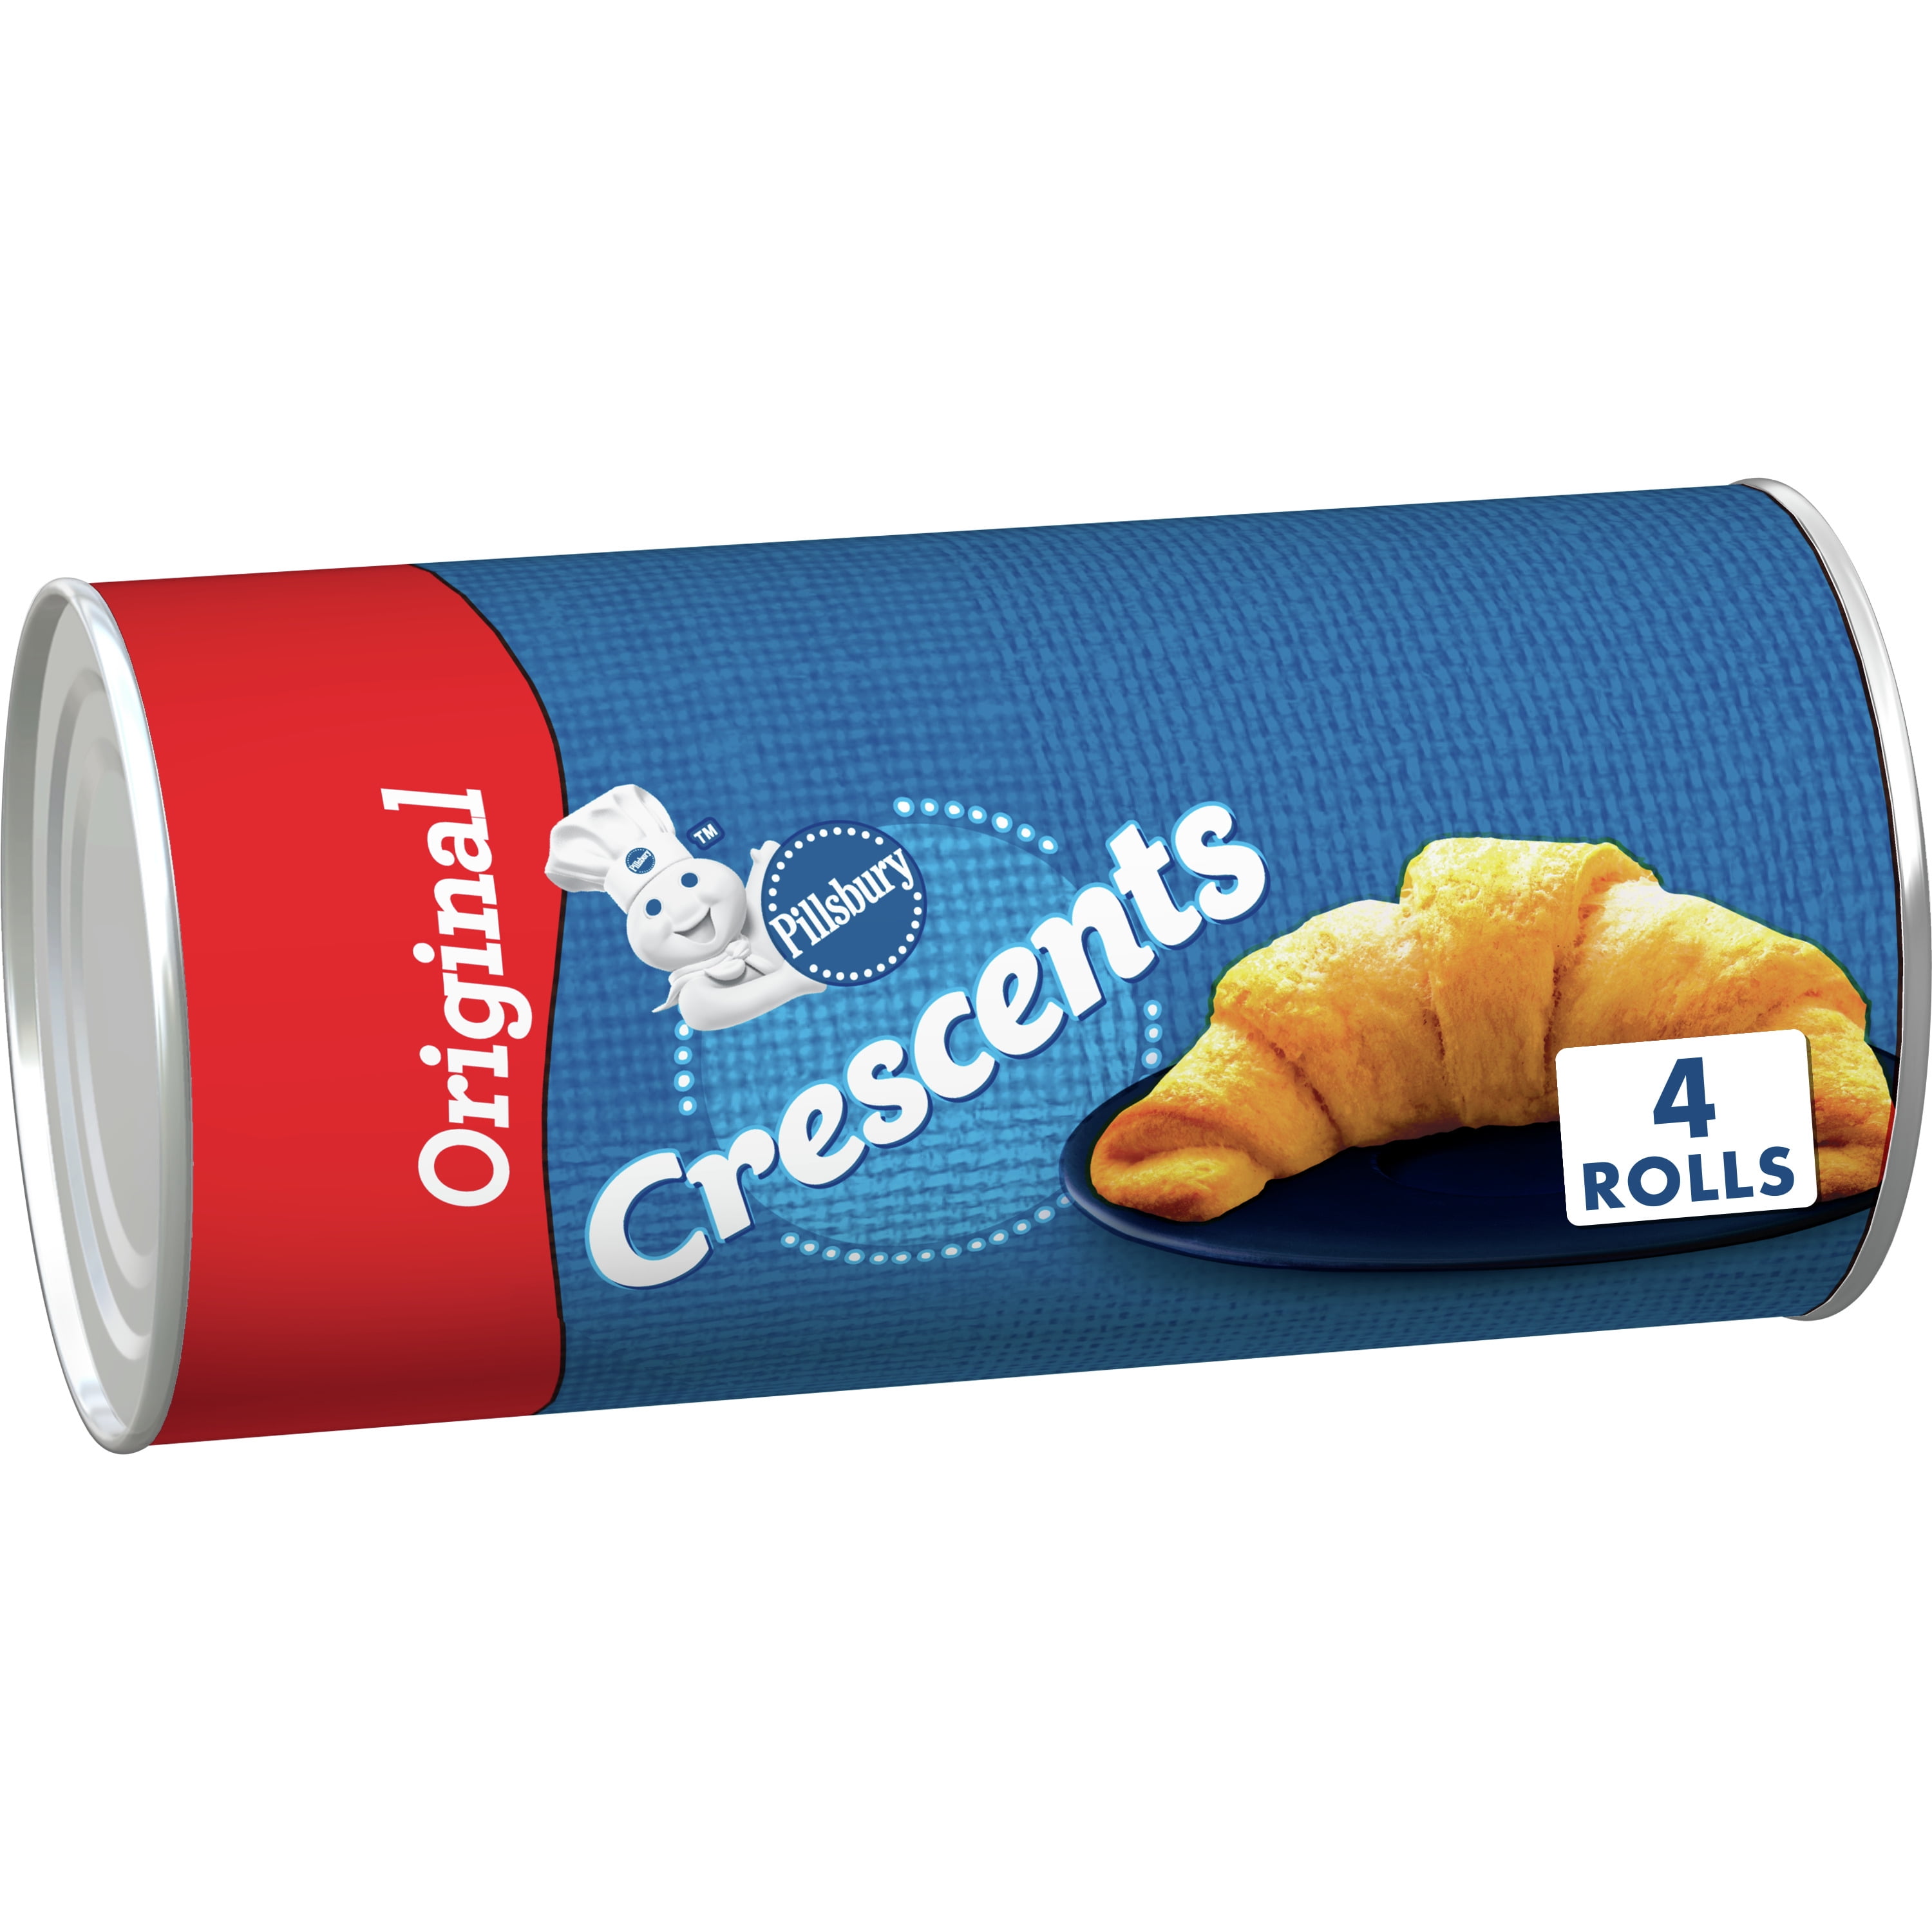 Pillsbury Crescent Rolls, Original Refrigerated Canned Pastry Dough, 4 Rolls,  4 oz 